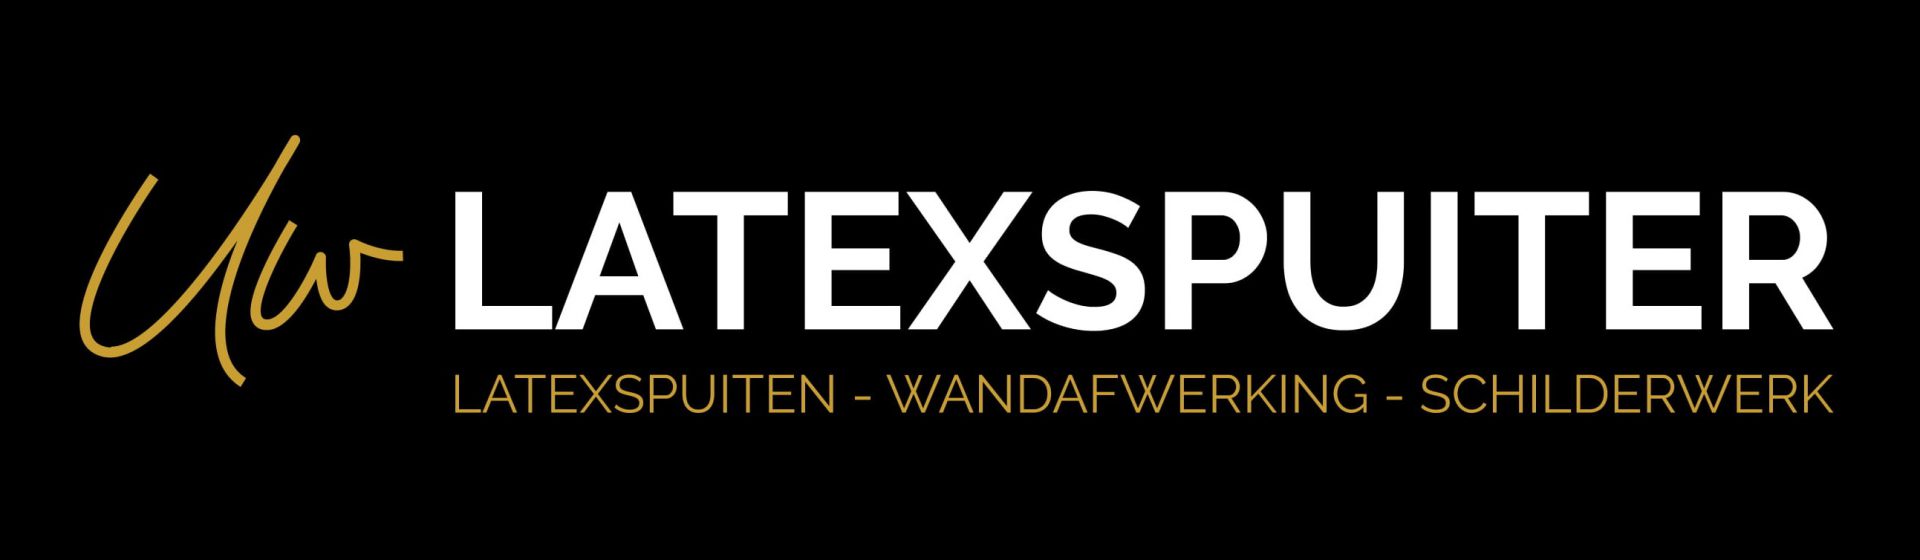 Uwlatexspuiter-logo